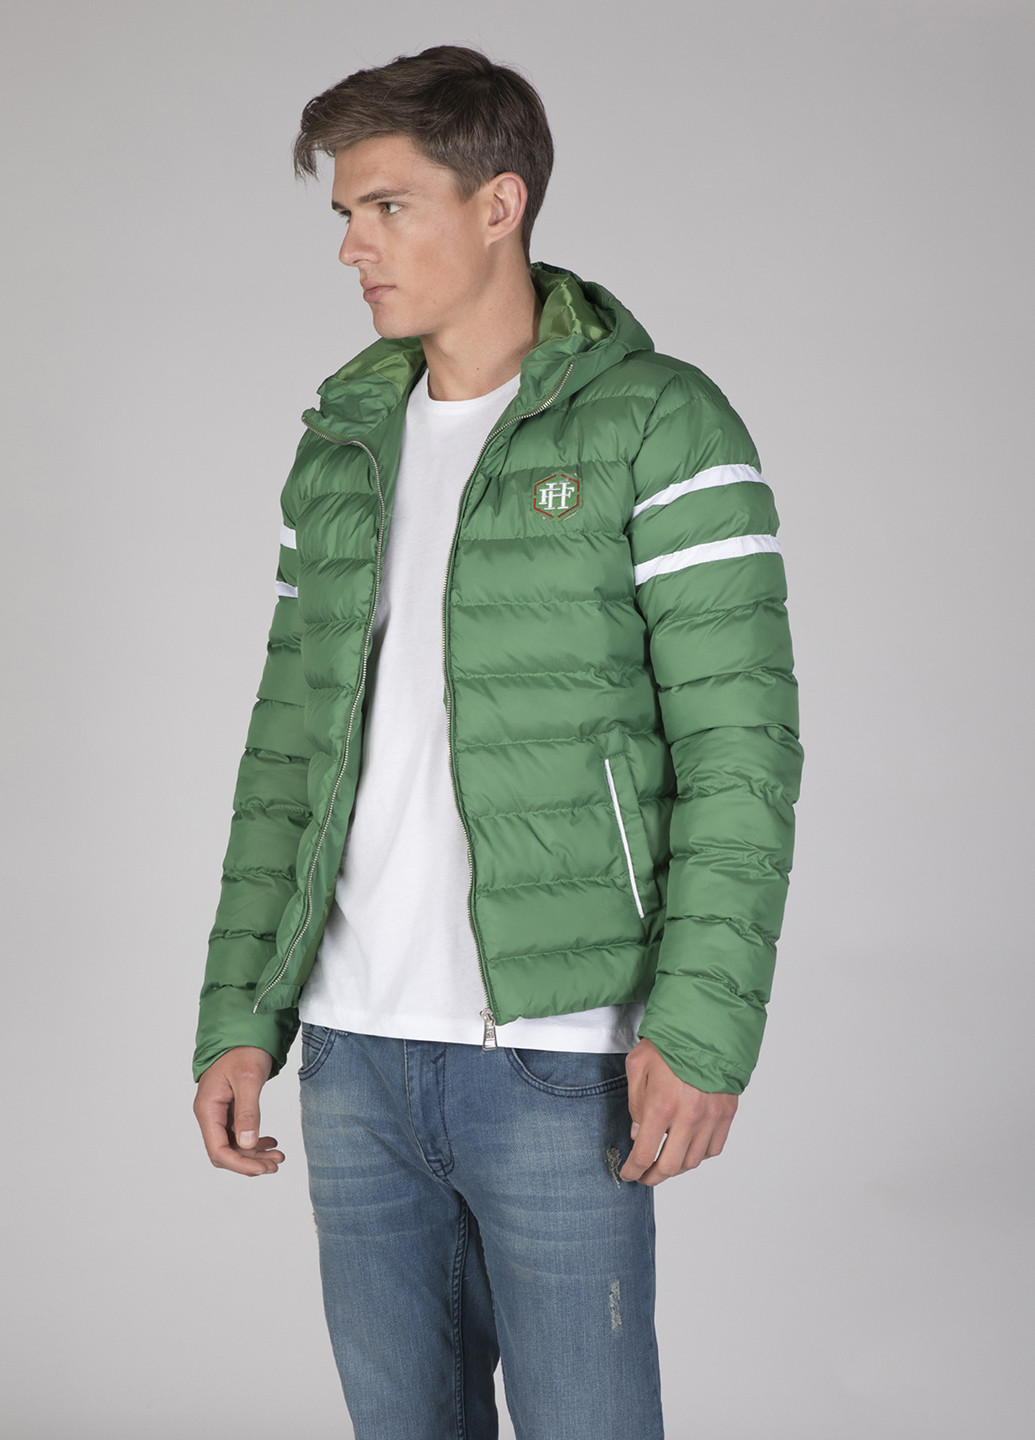 Зеленая зимняя куртка Felix Hardy